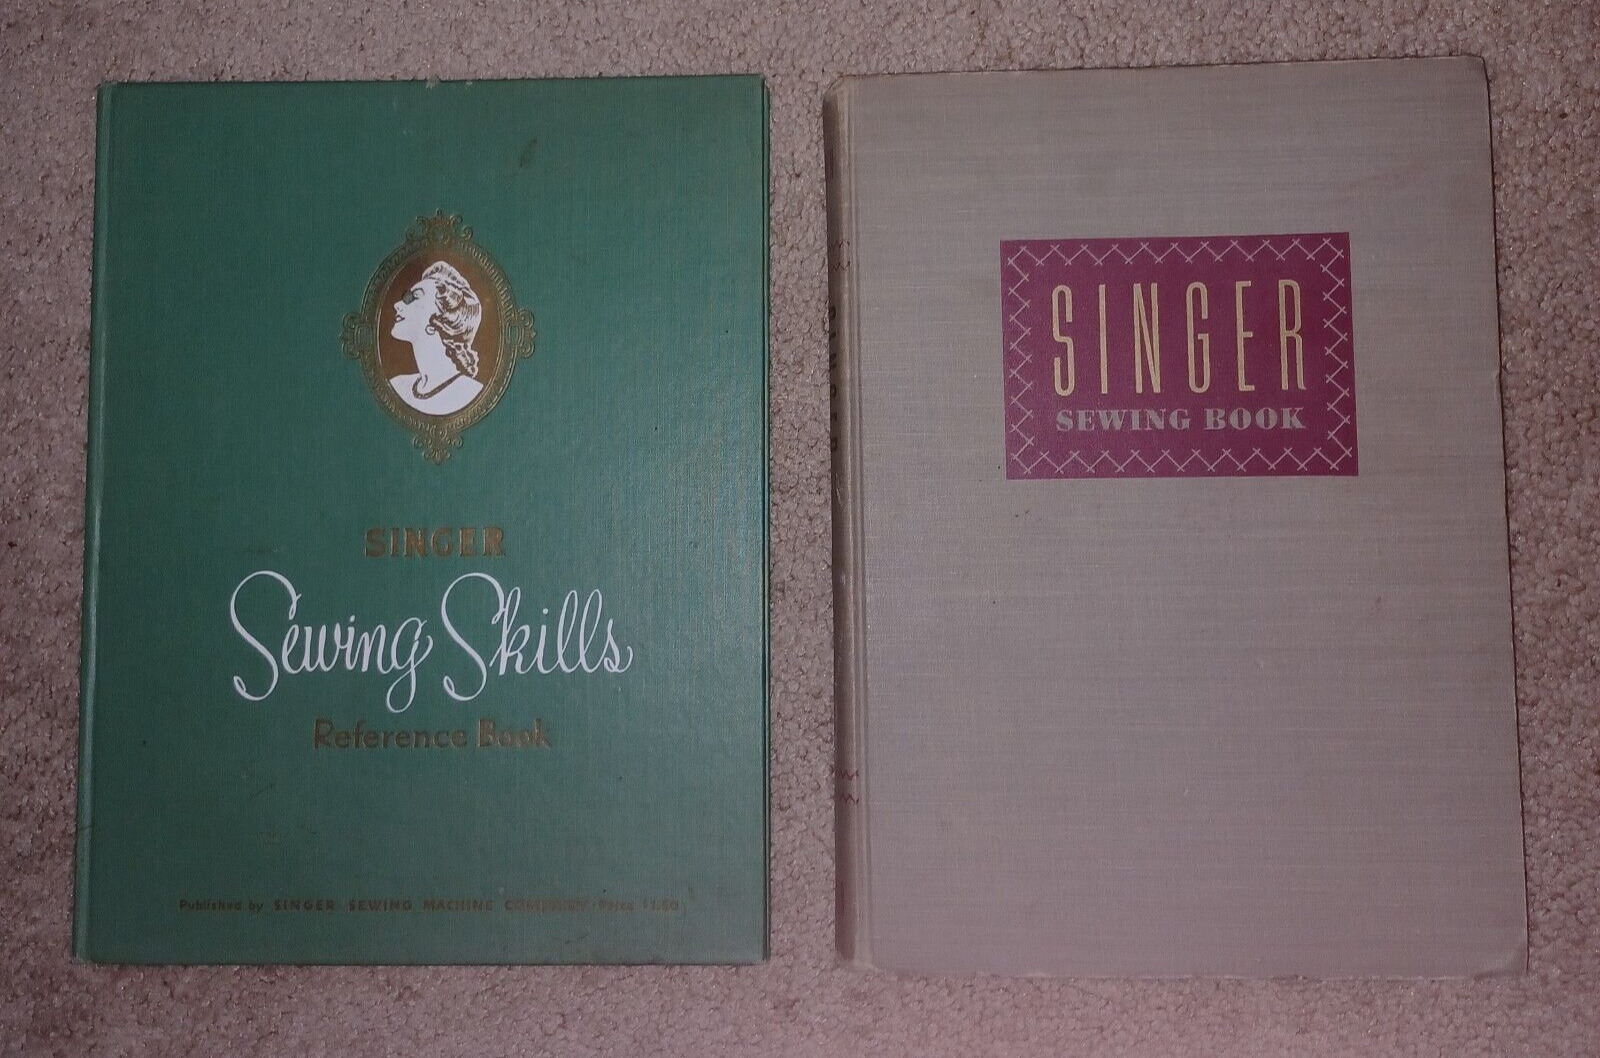 Vintage Singer Sewing Skills Reference Book (1954) & Singer Sewing Book (1949)